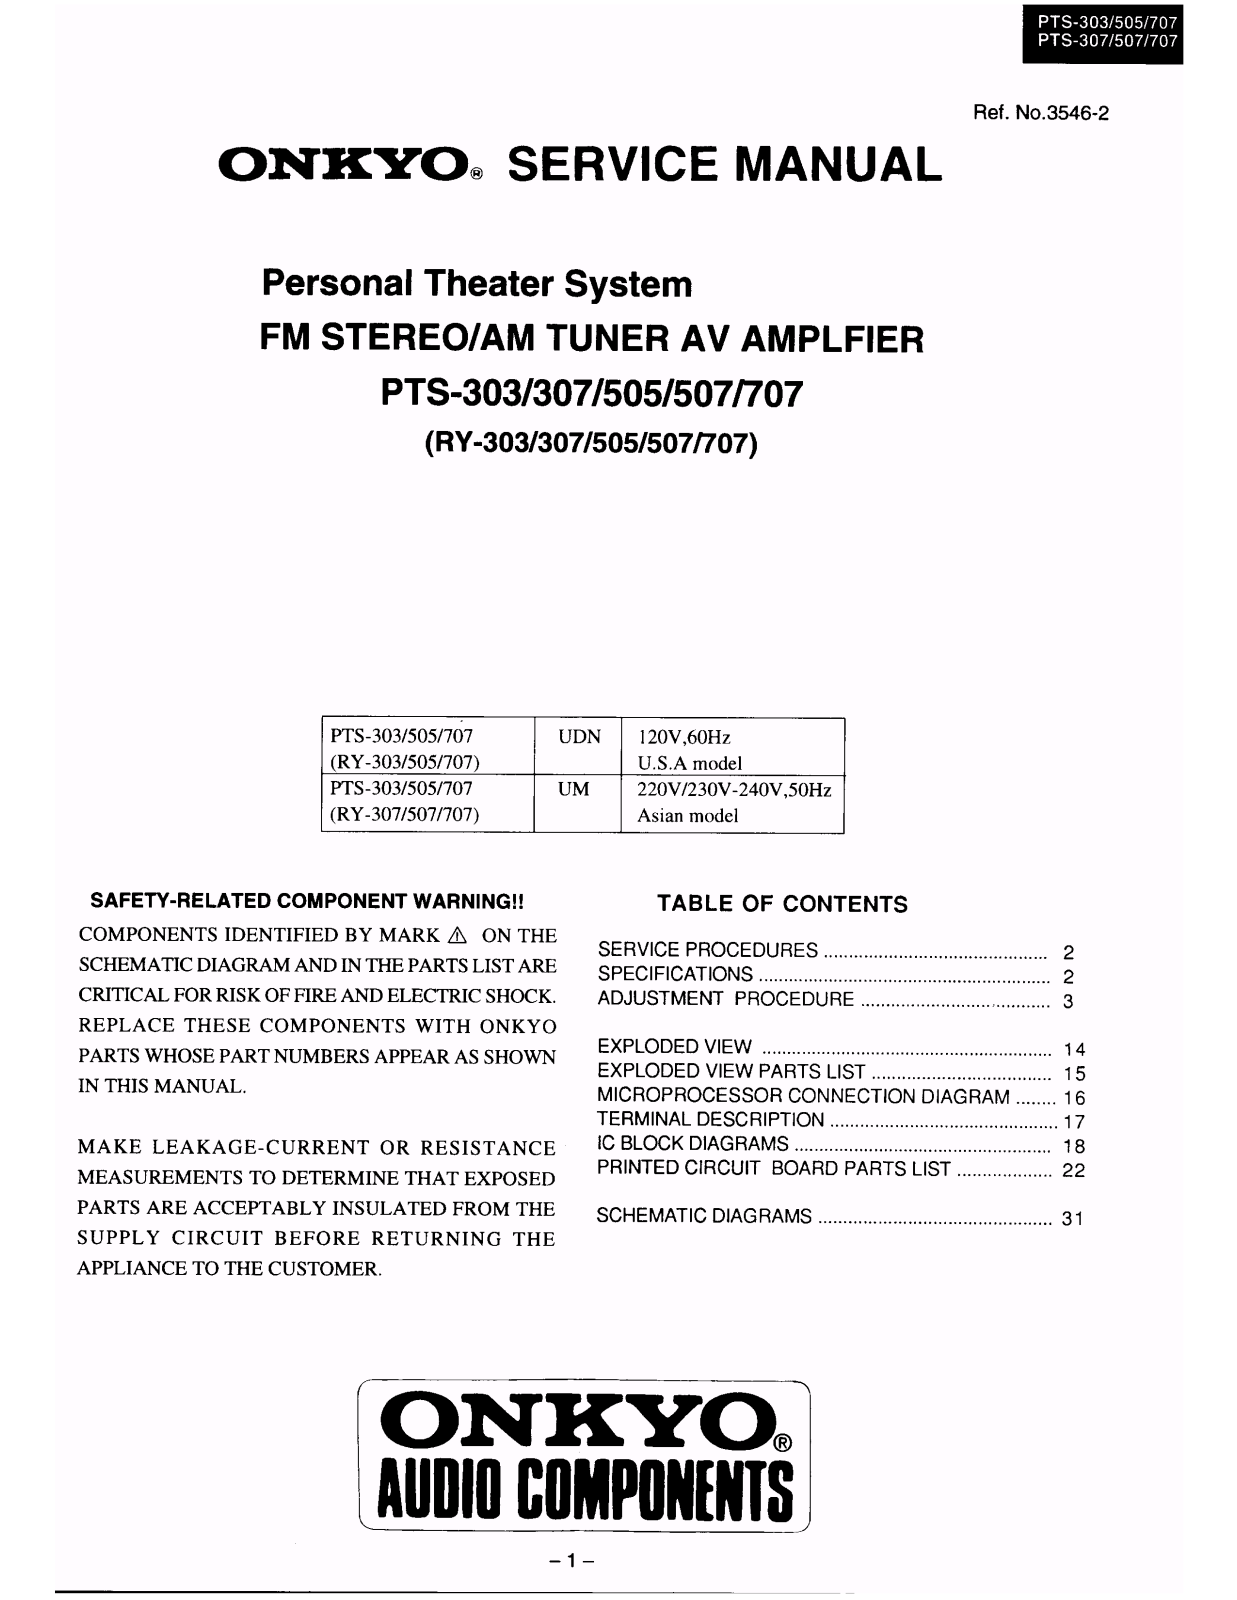 Onkyo PTS-707, PTS-507, PTS-307, PTS-305 Service Manual